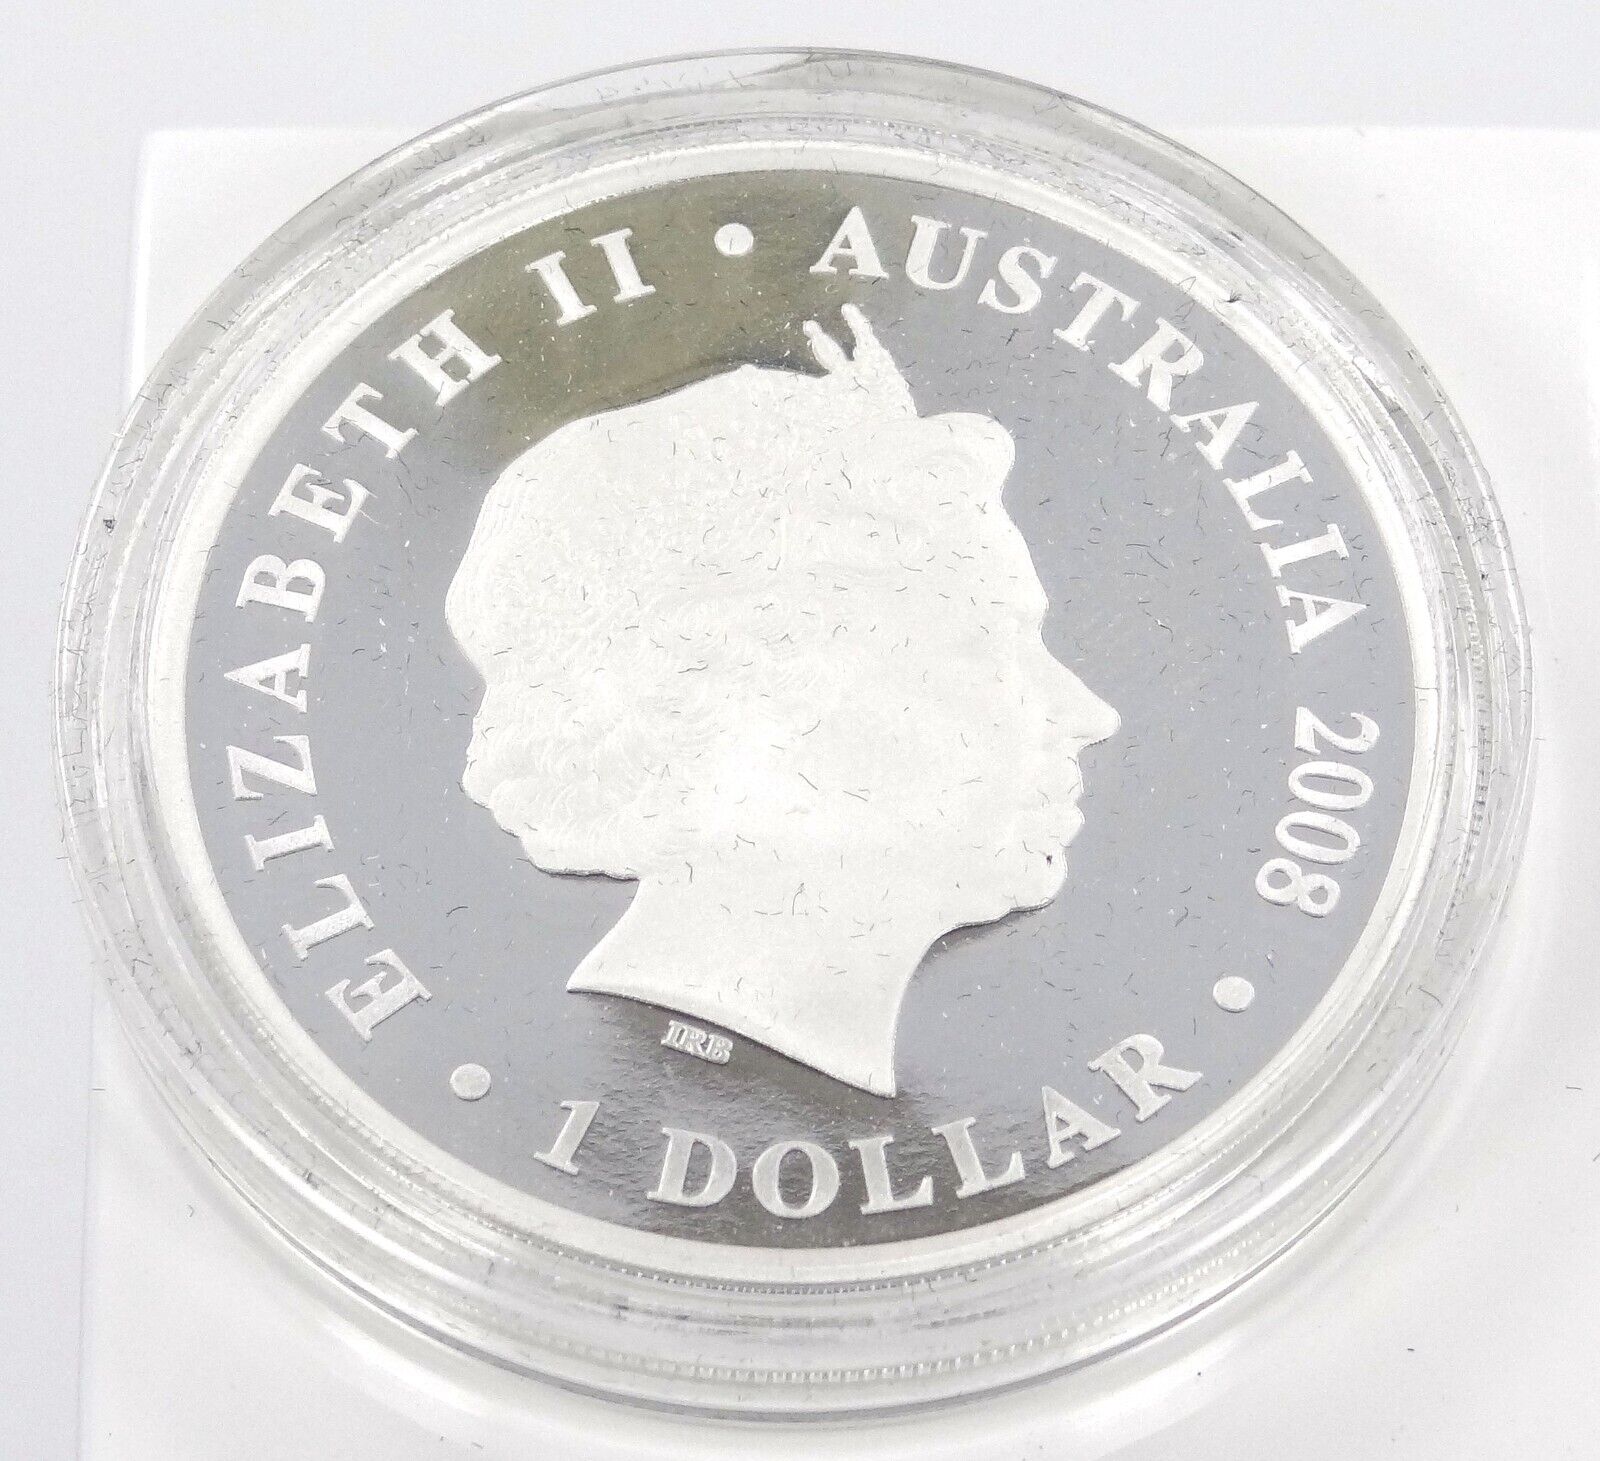 1 Oz Silver Coin 2008 $1 Australia Australian Football 150 Years Proof Coin-classypw.com-1